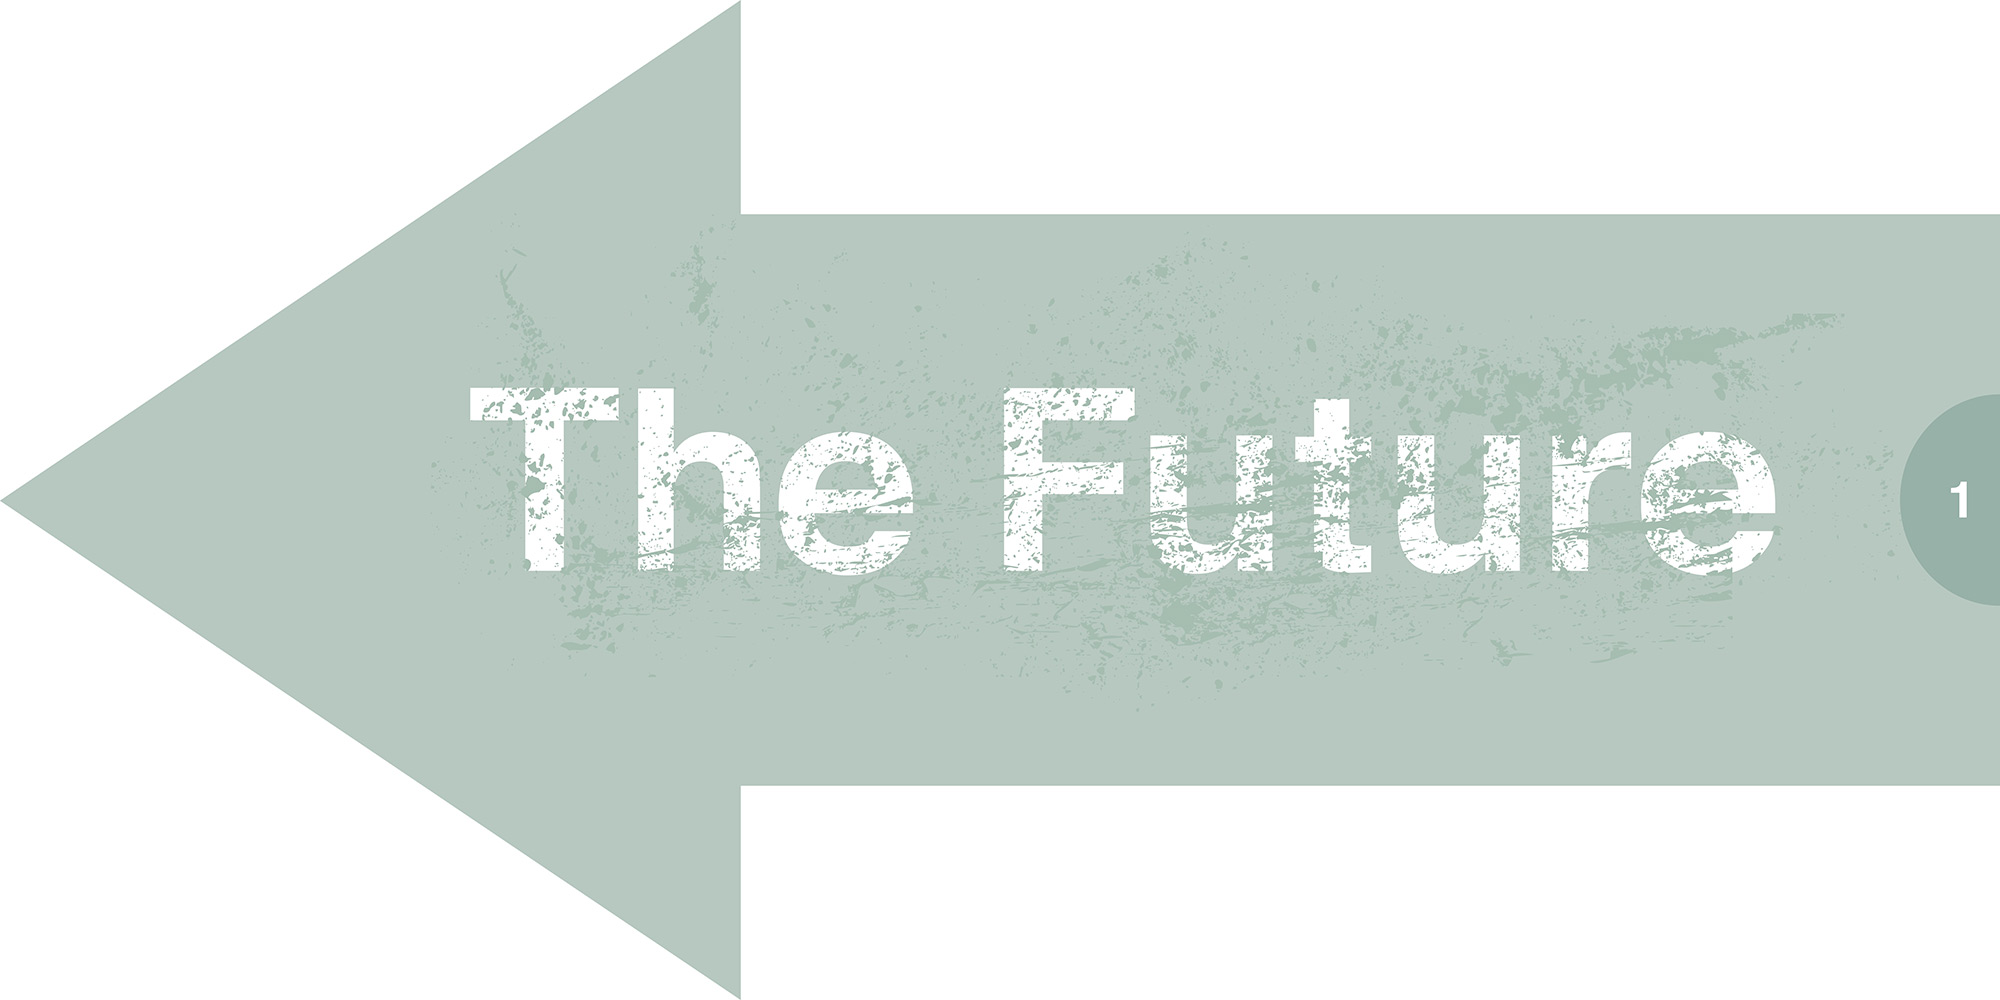 Jeff Kern design for "The Future"